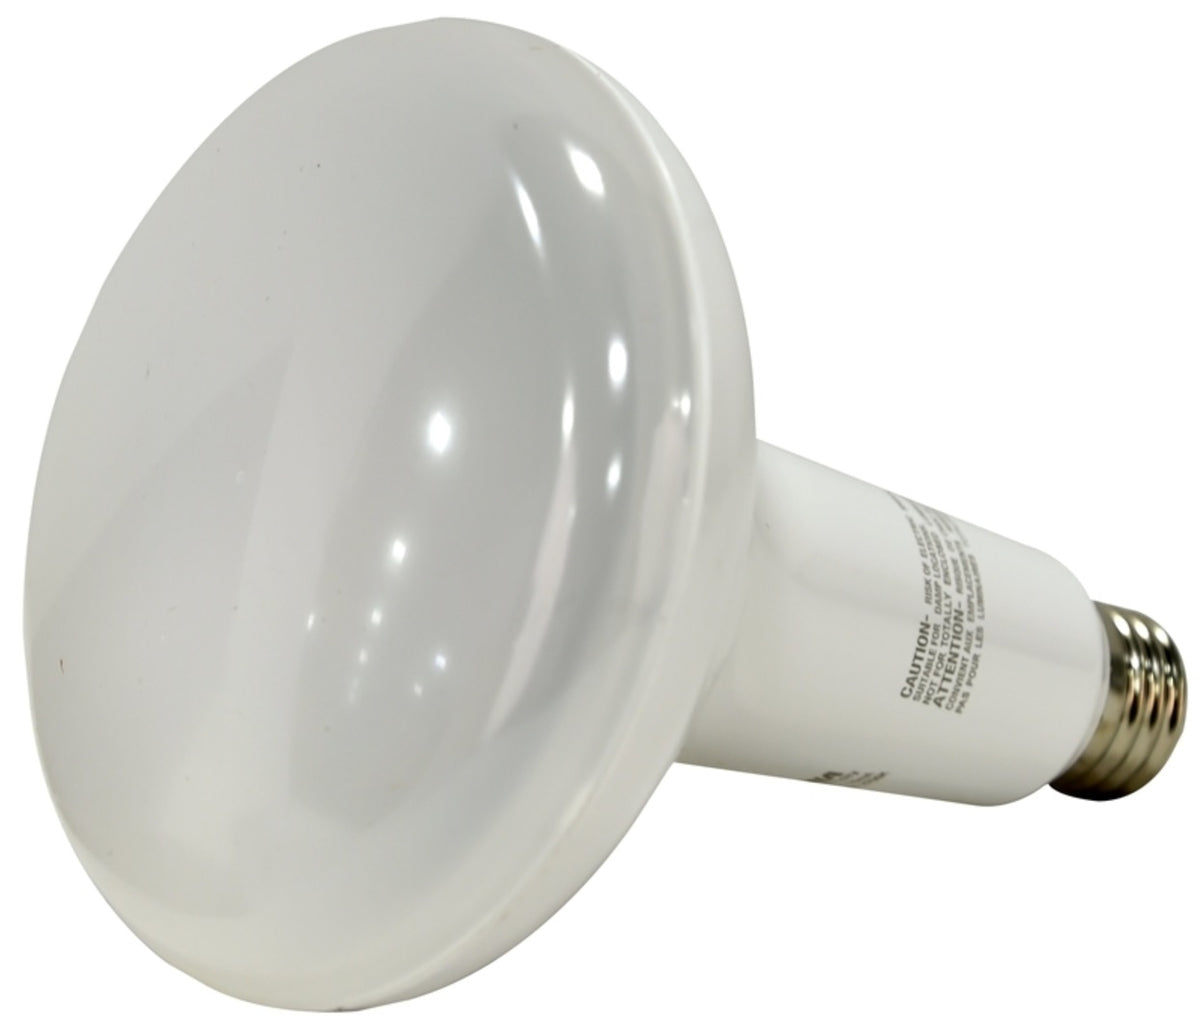 Sylvania 79498 Contractor Reflector Light Bulbs, 120 Volt, 13 Watts